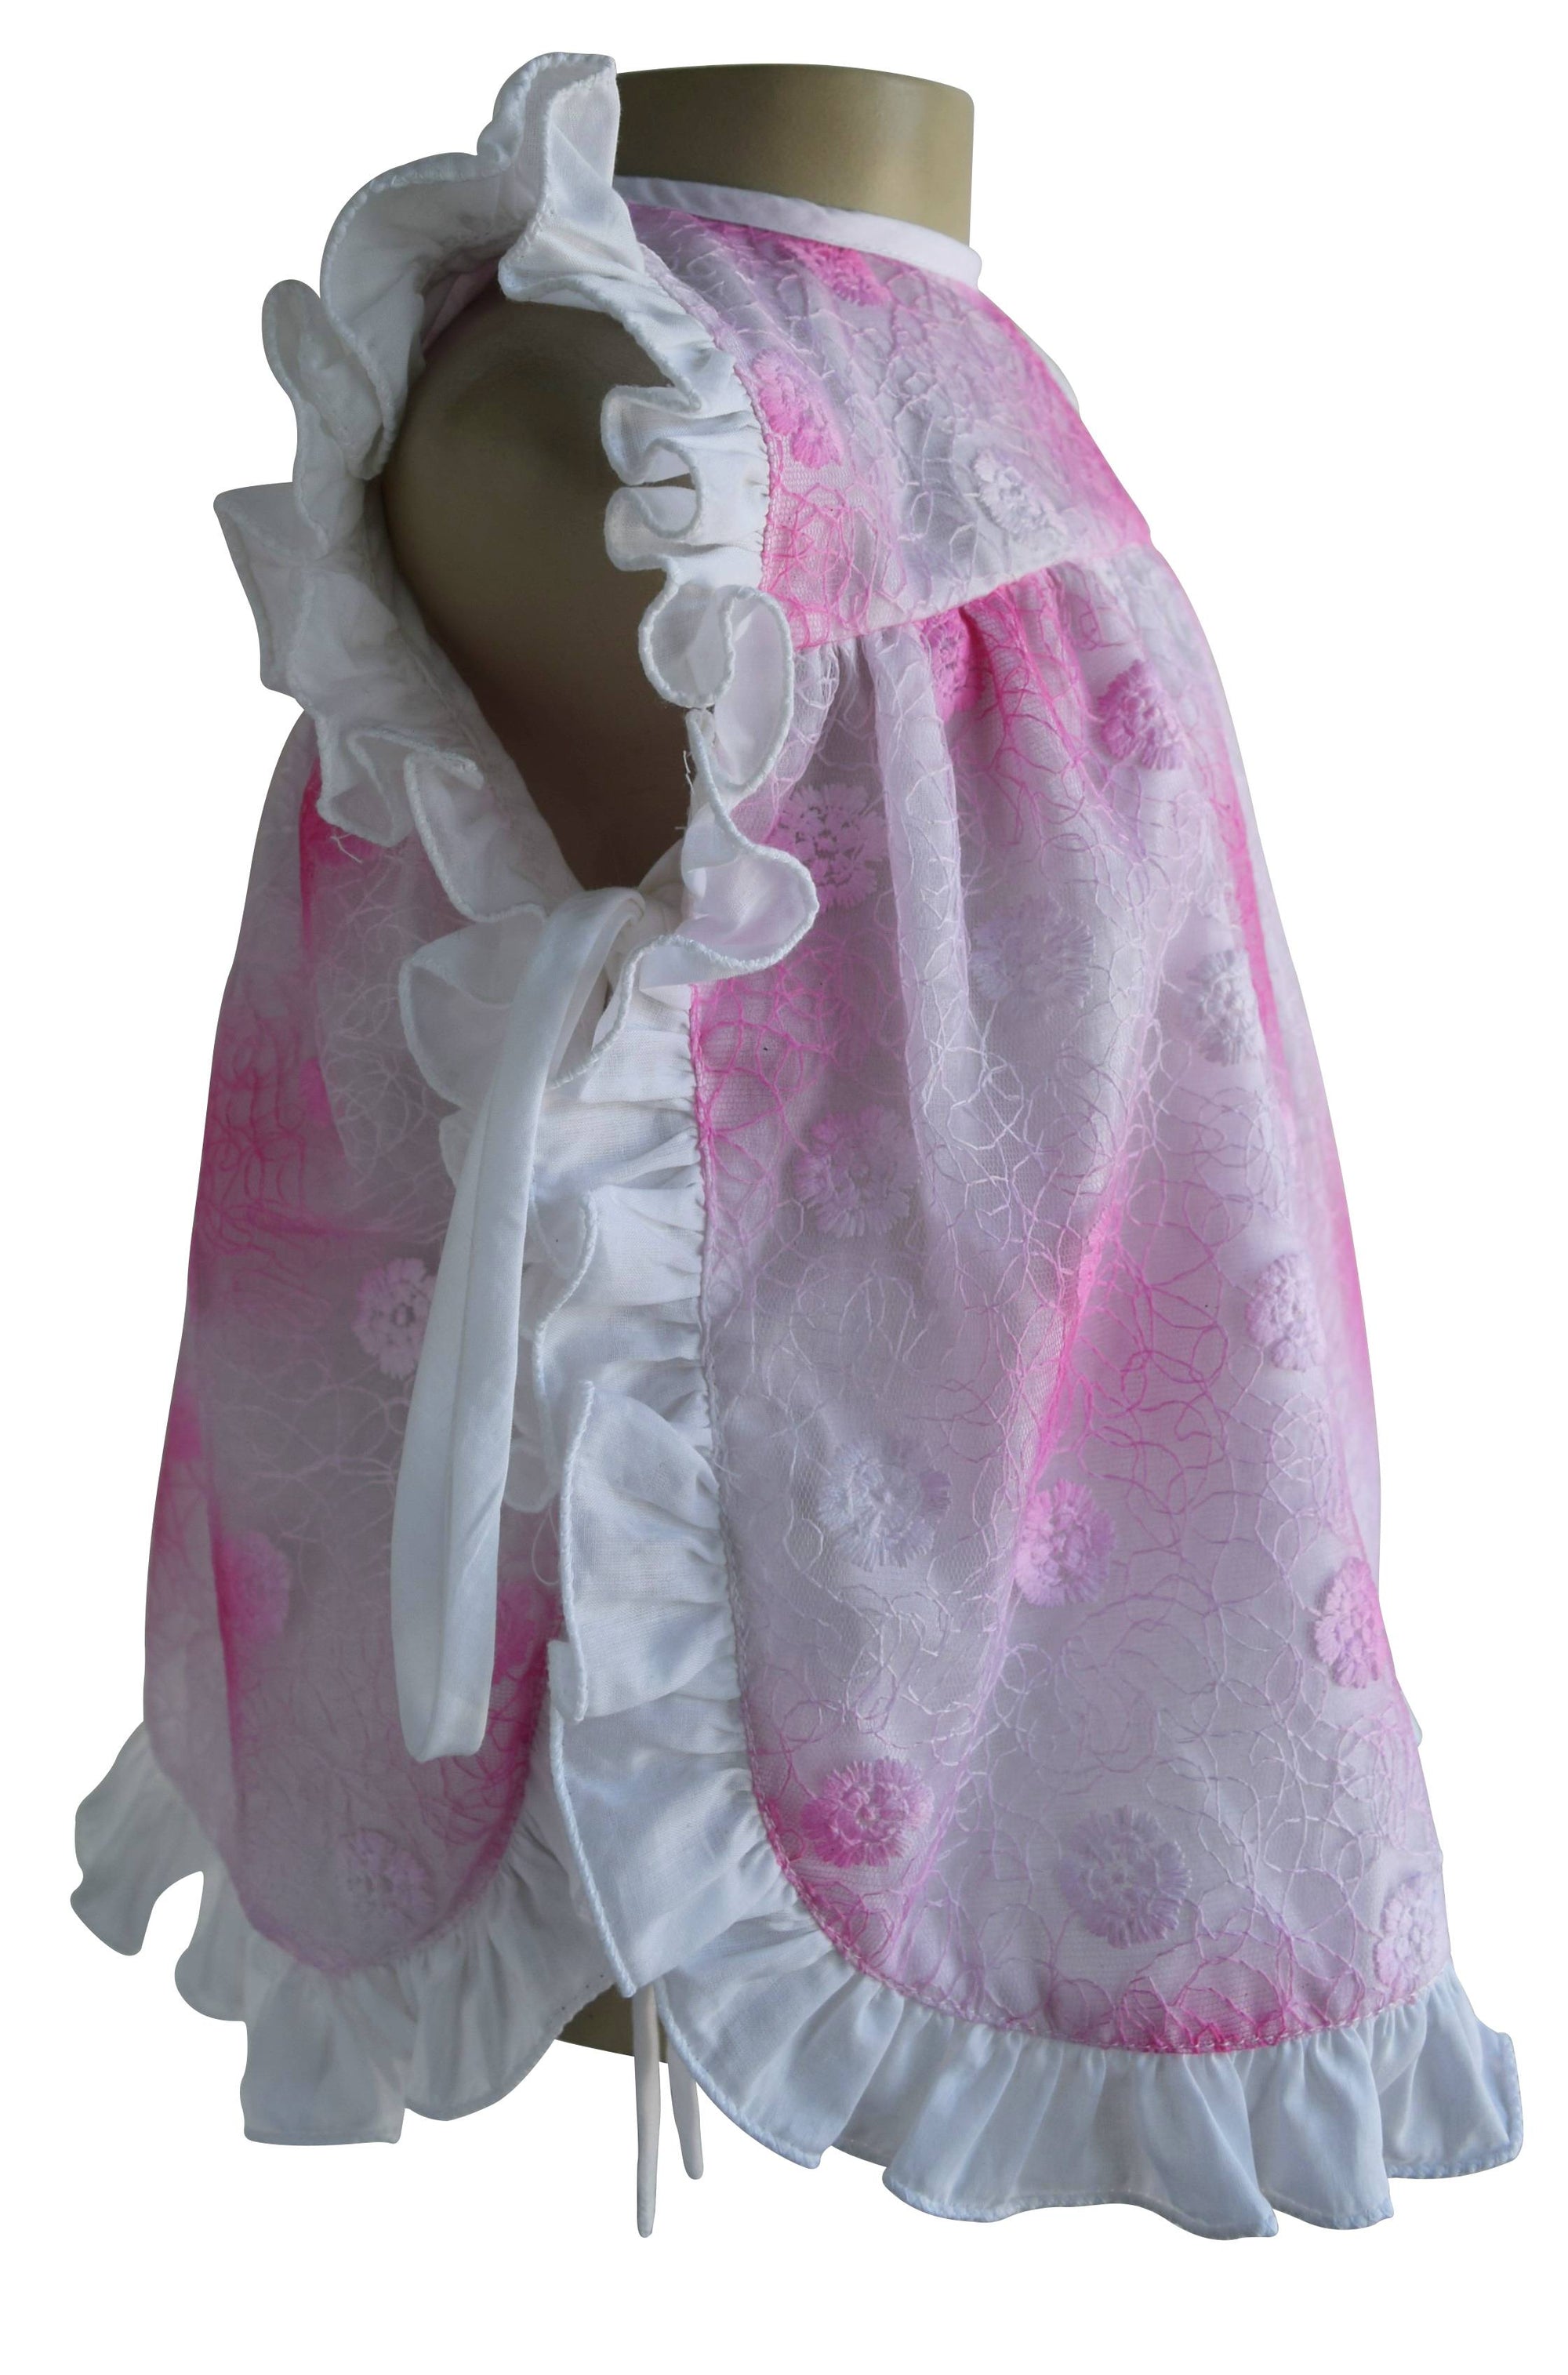 Pink & White Lace new born Baby Dress